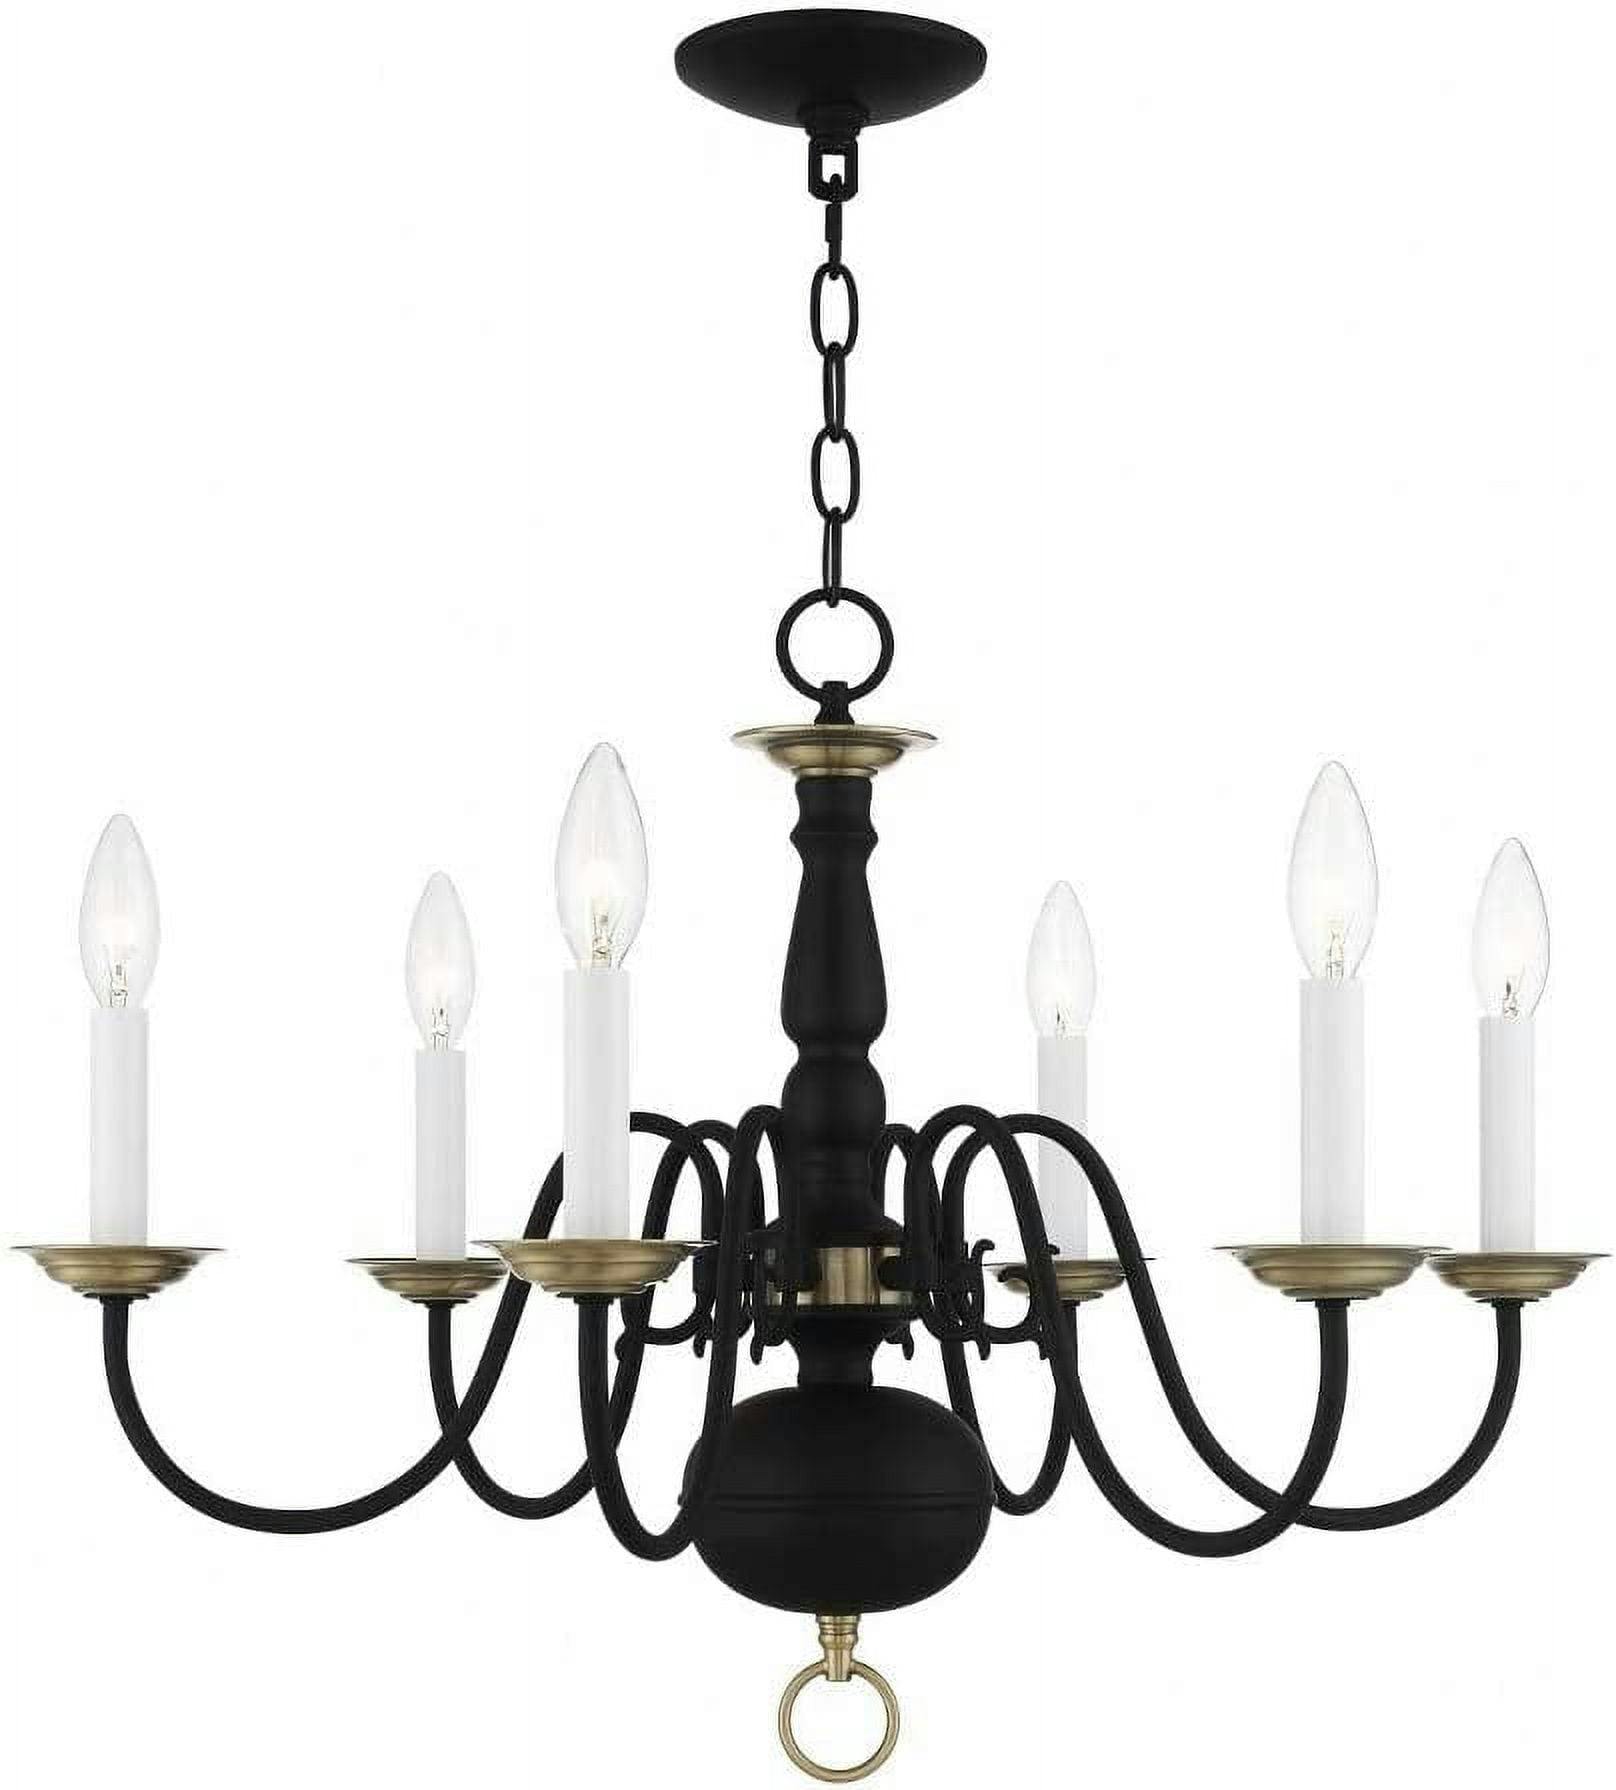 Elegant Colonial Black and Antique Brass 6-Light Crystal Chandelier